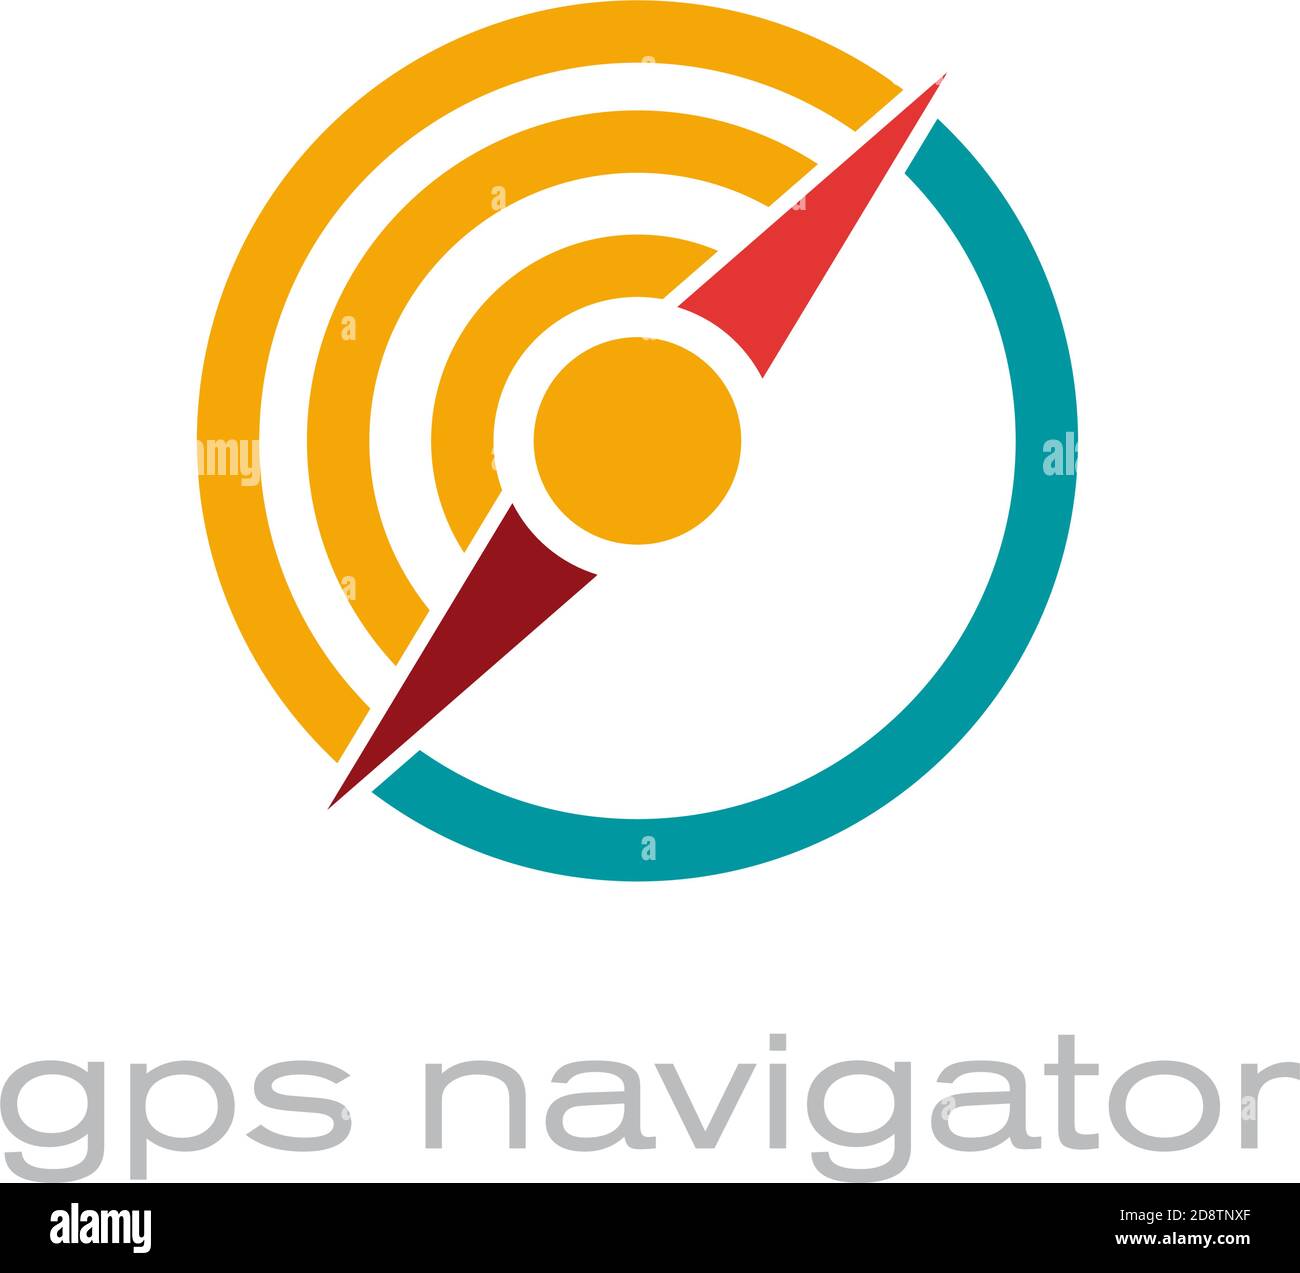 Vector abstract  gps navigator Stock Vector